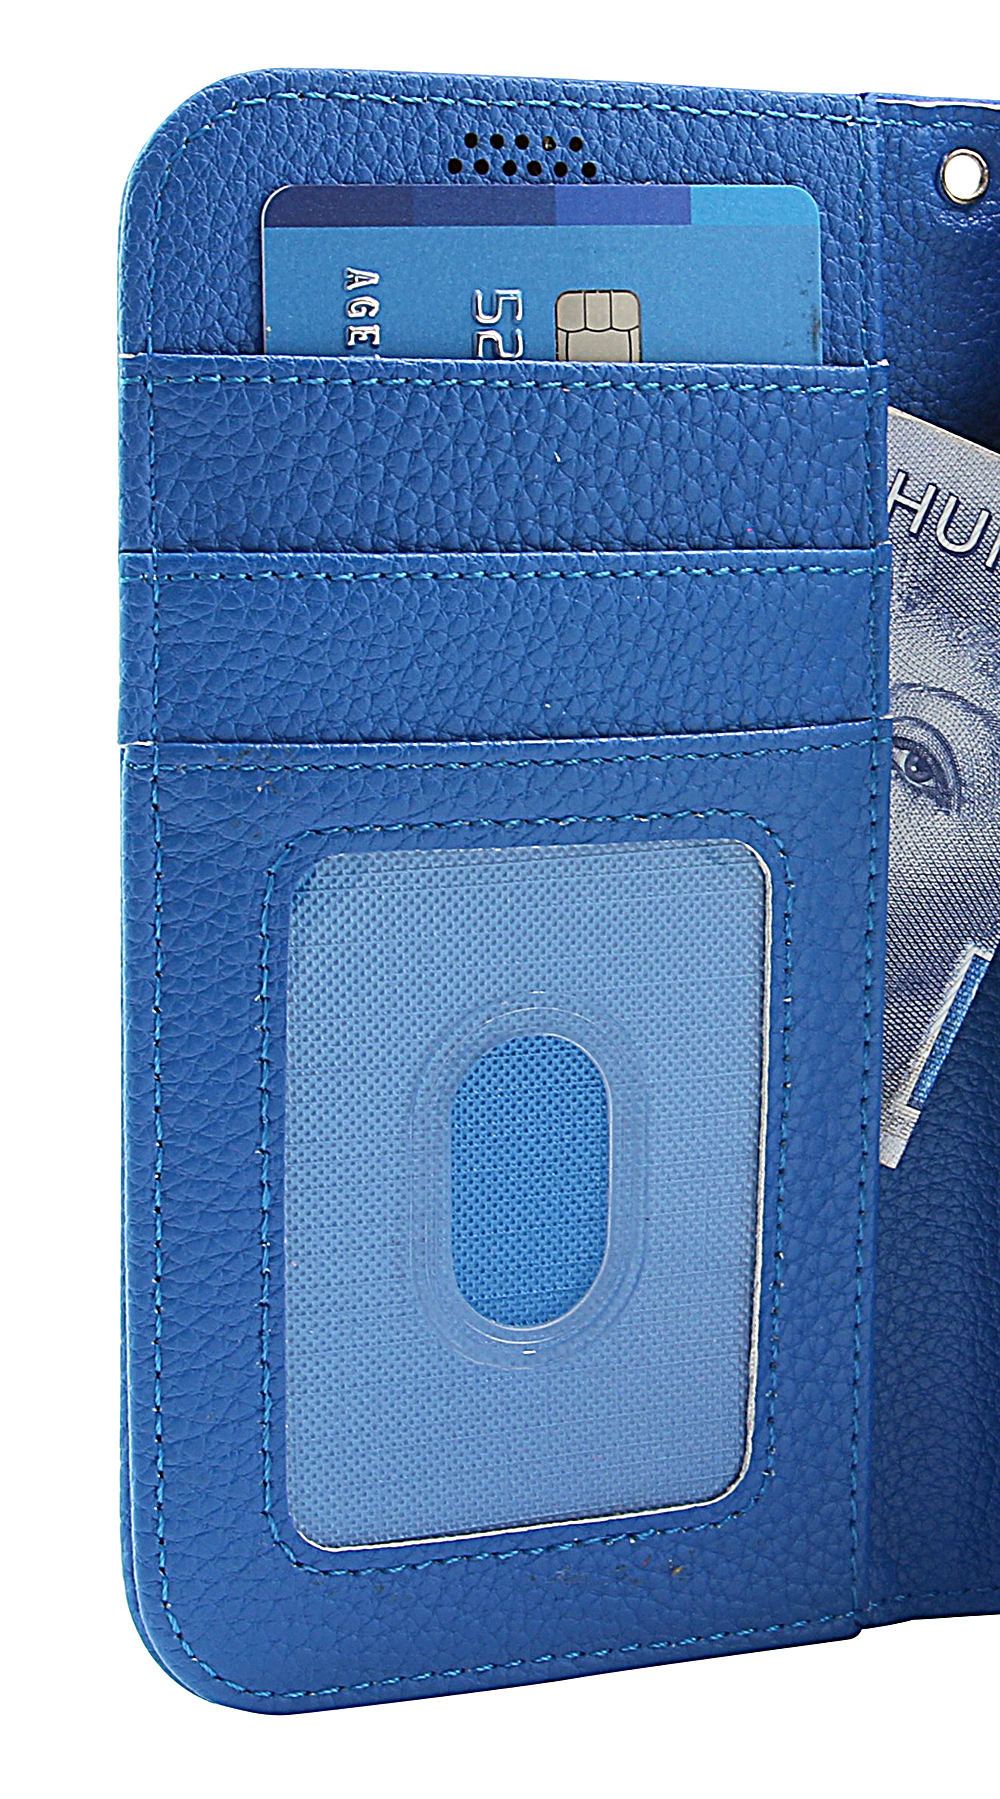 New Standcase Wallet Sony Xperia Z5 Premium